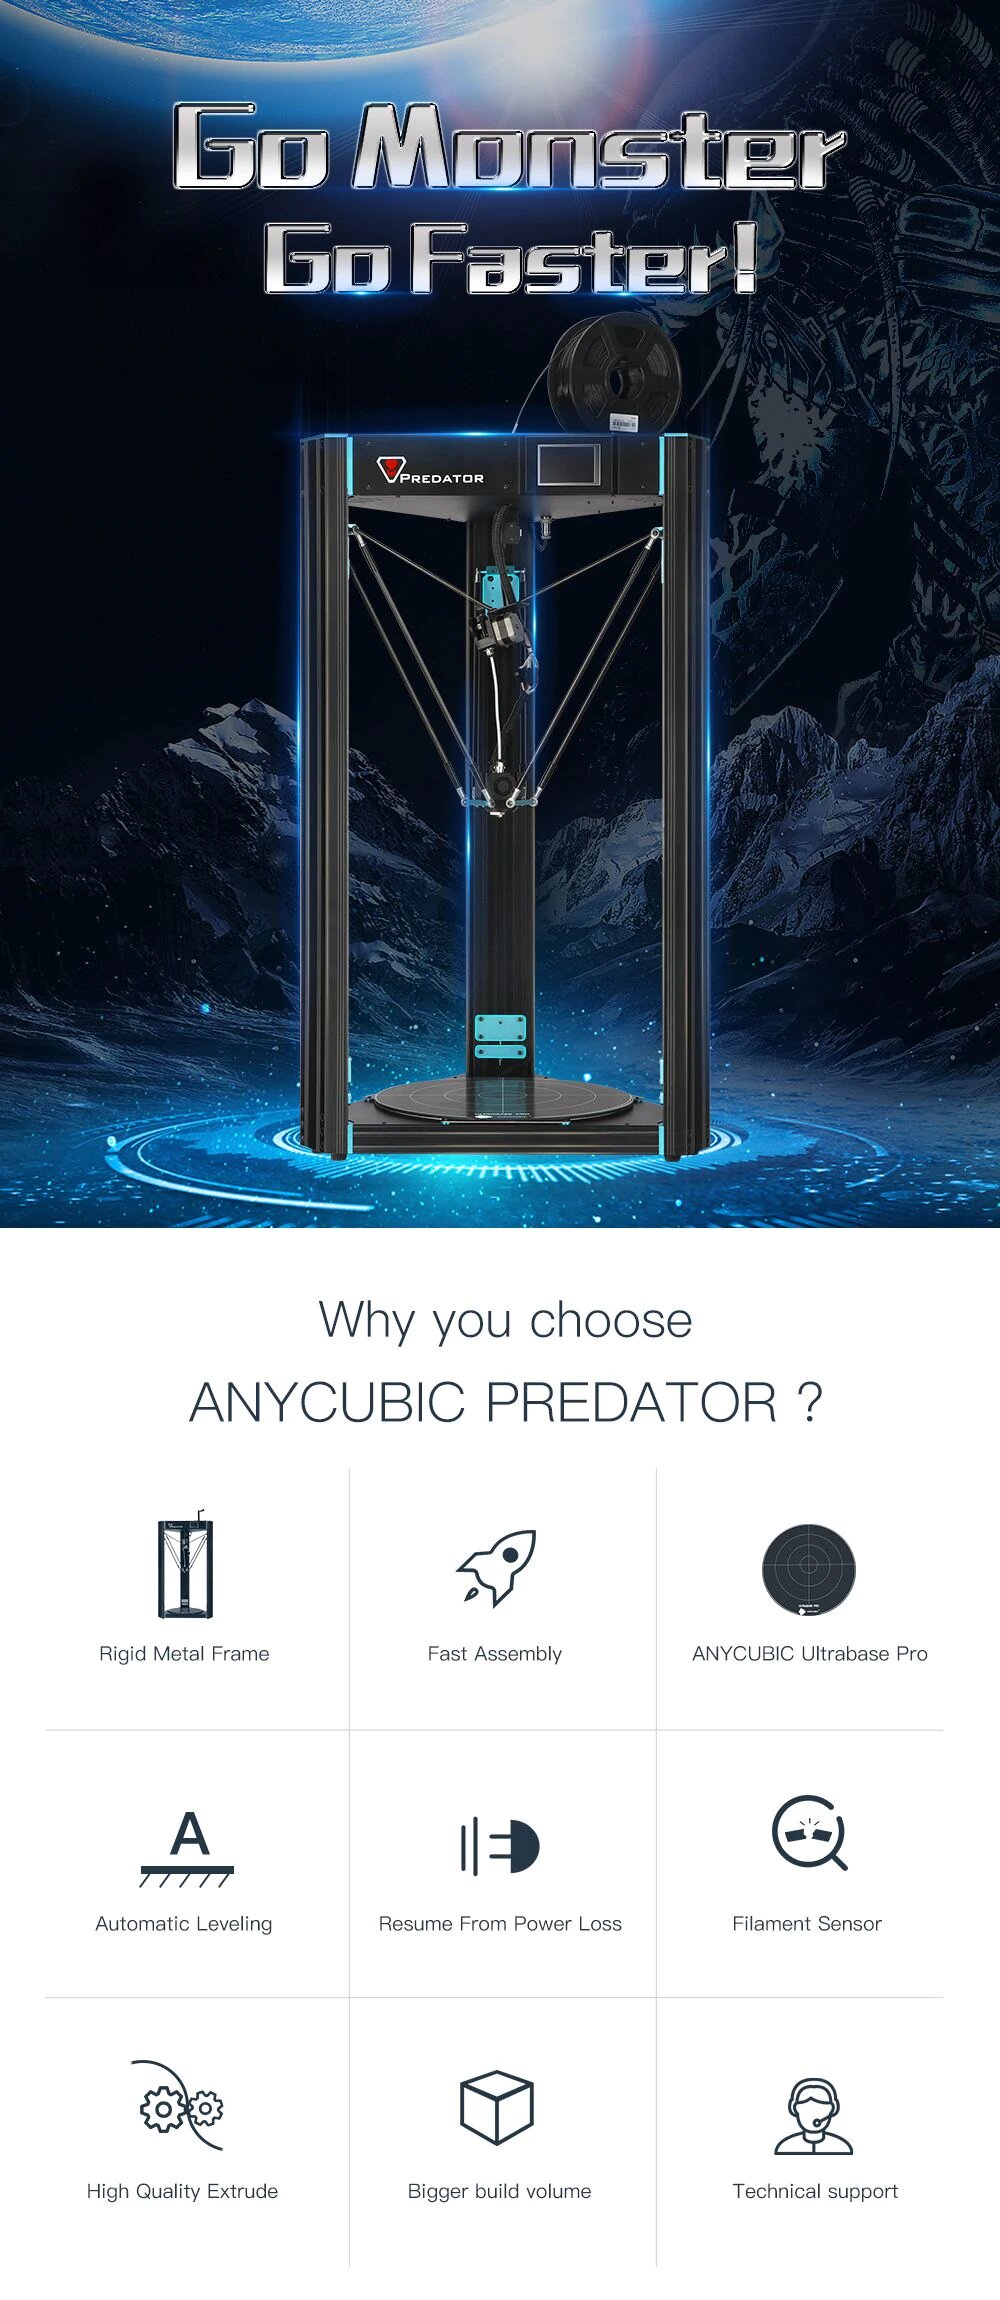 Anycubic Predator - Large Delta 3D Printer